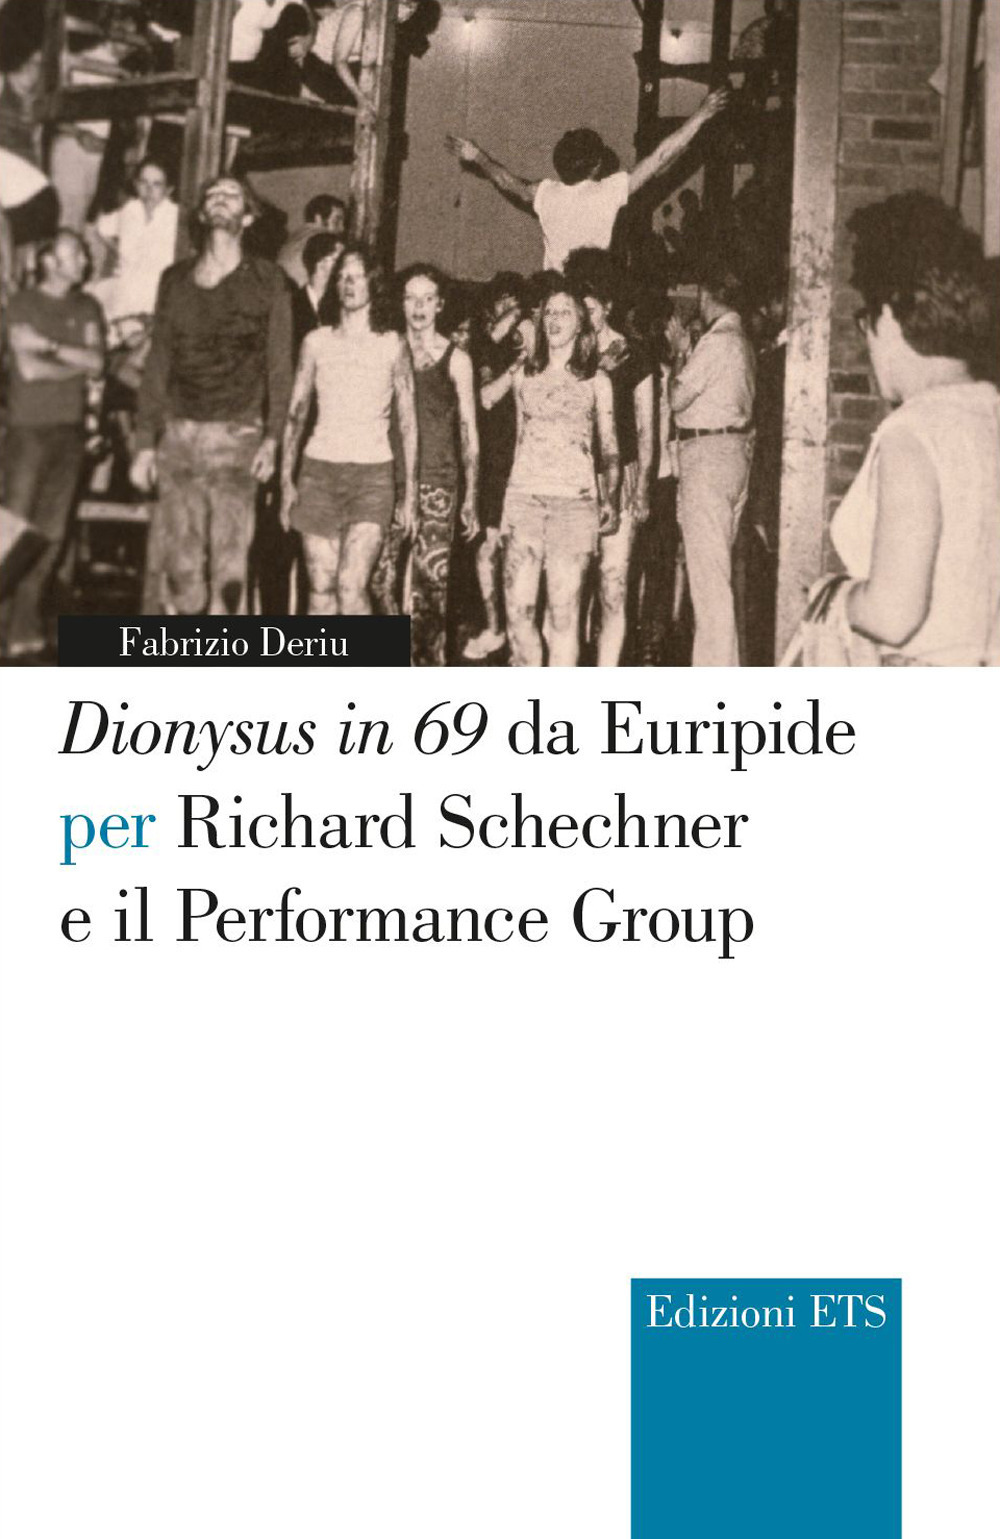 Dionysus in 69 da Euripide per Richard Schechner e il performance group